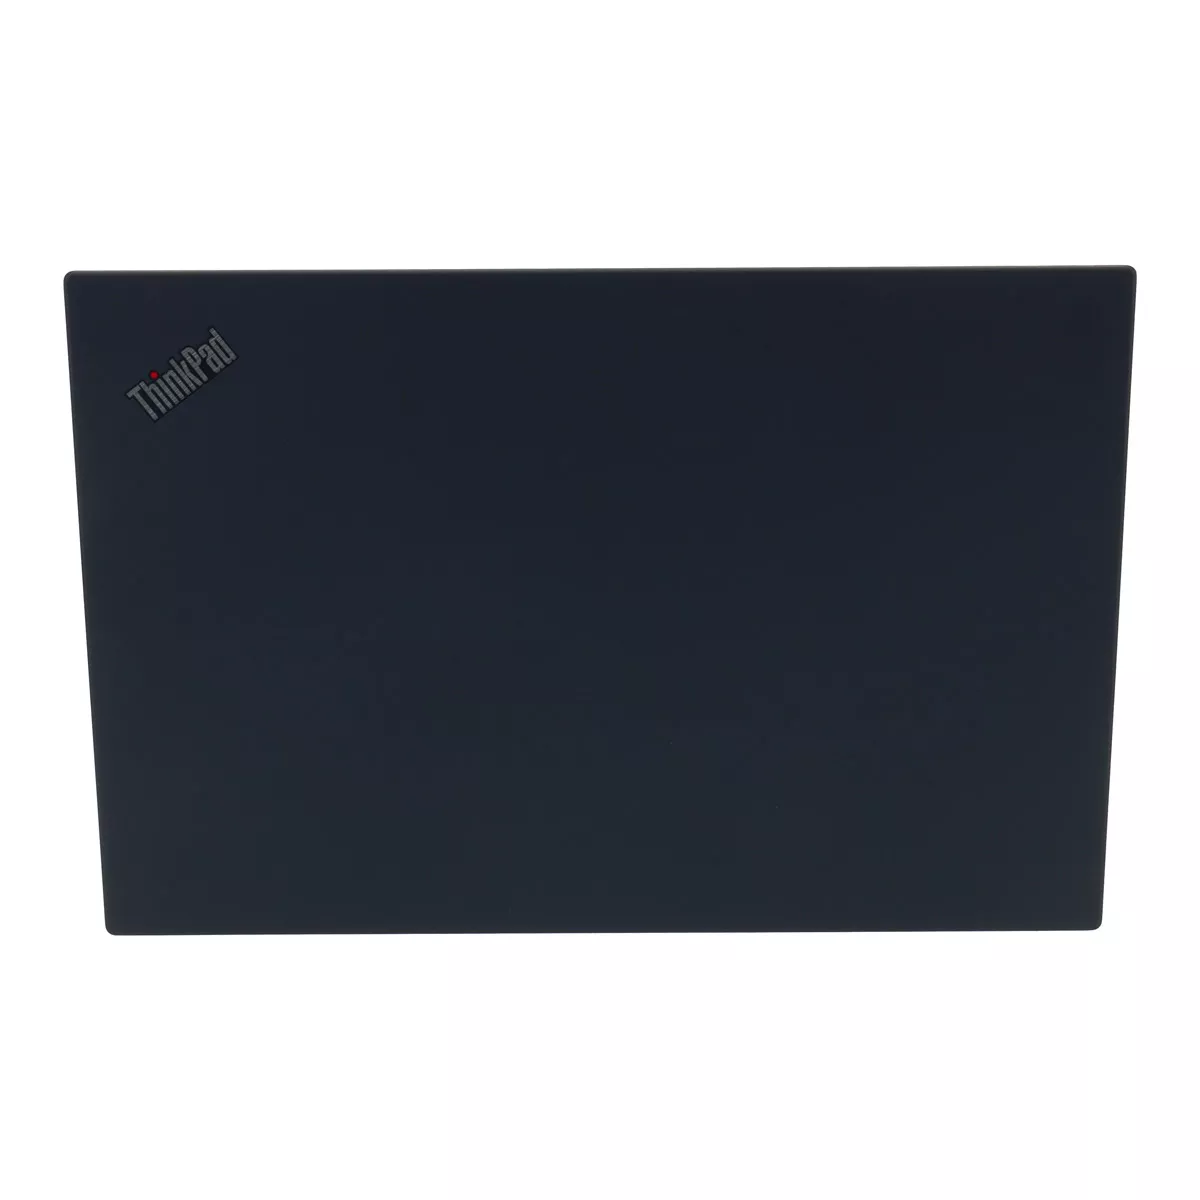 Lenovo ThinkPad T590 Core i7 8665U Full-HD Touch 16 GB 500 GB M.2 nVME SSD Webcam A